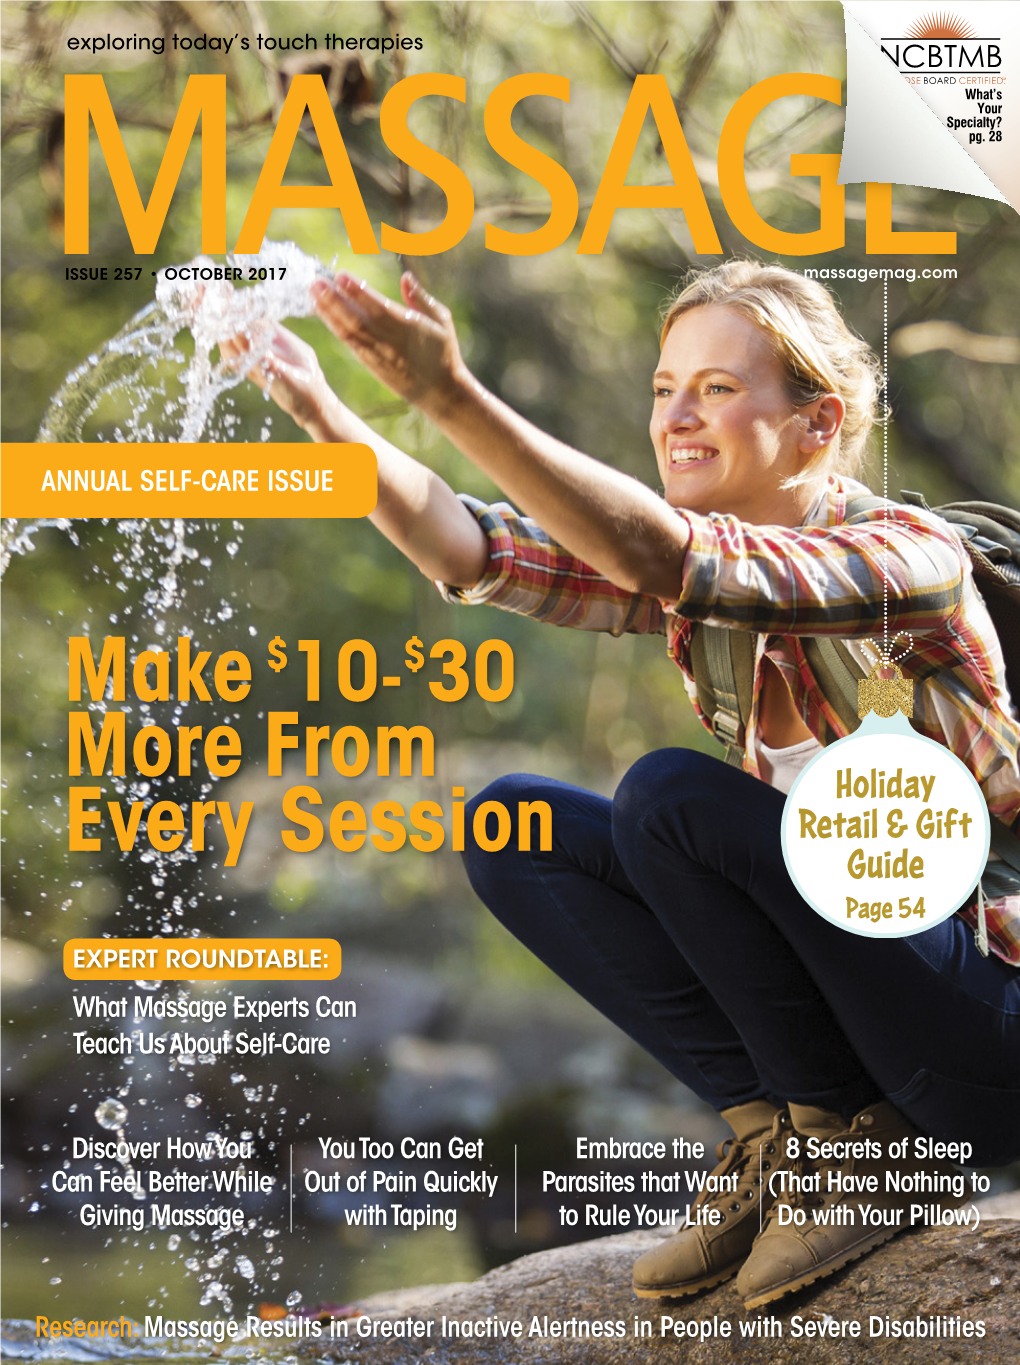 MASSAGE Magazine, Issue 257, October 2017